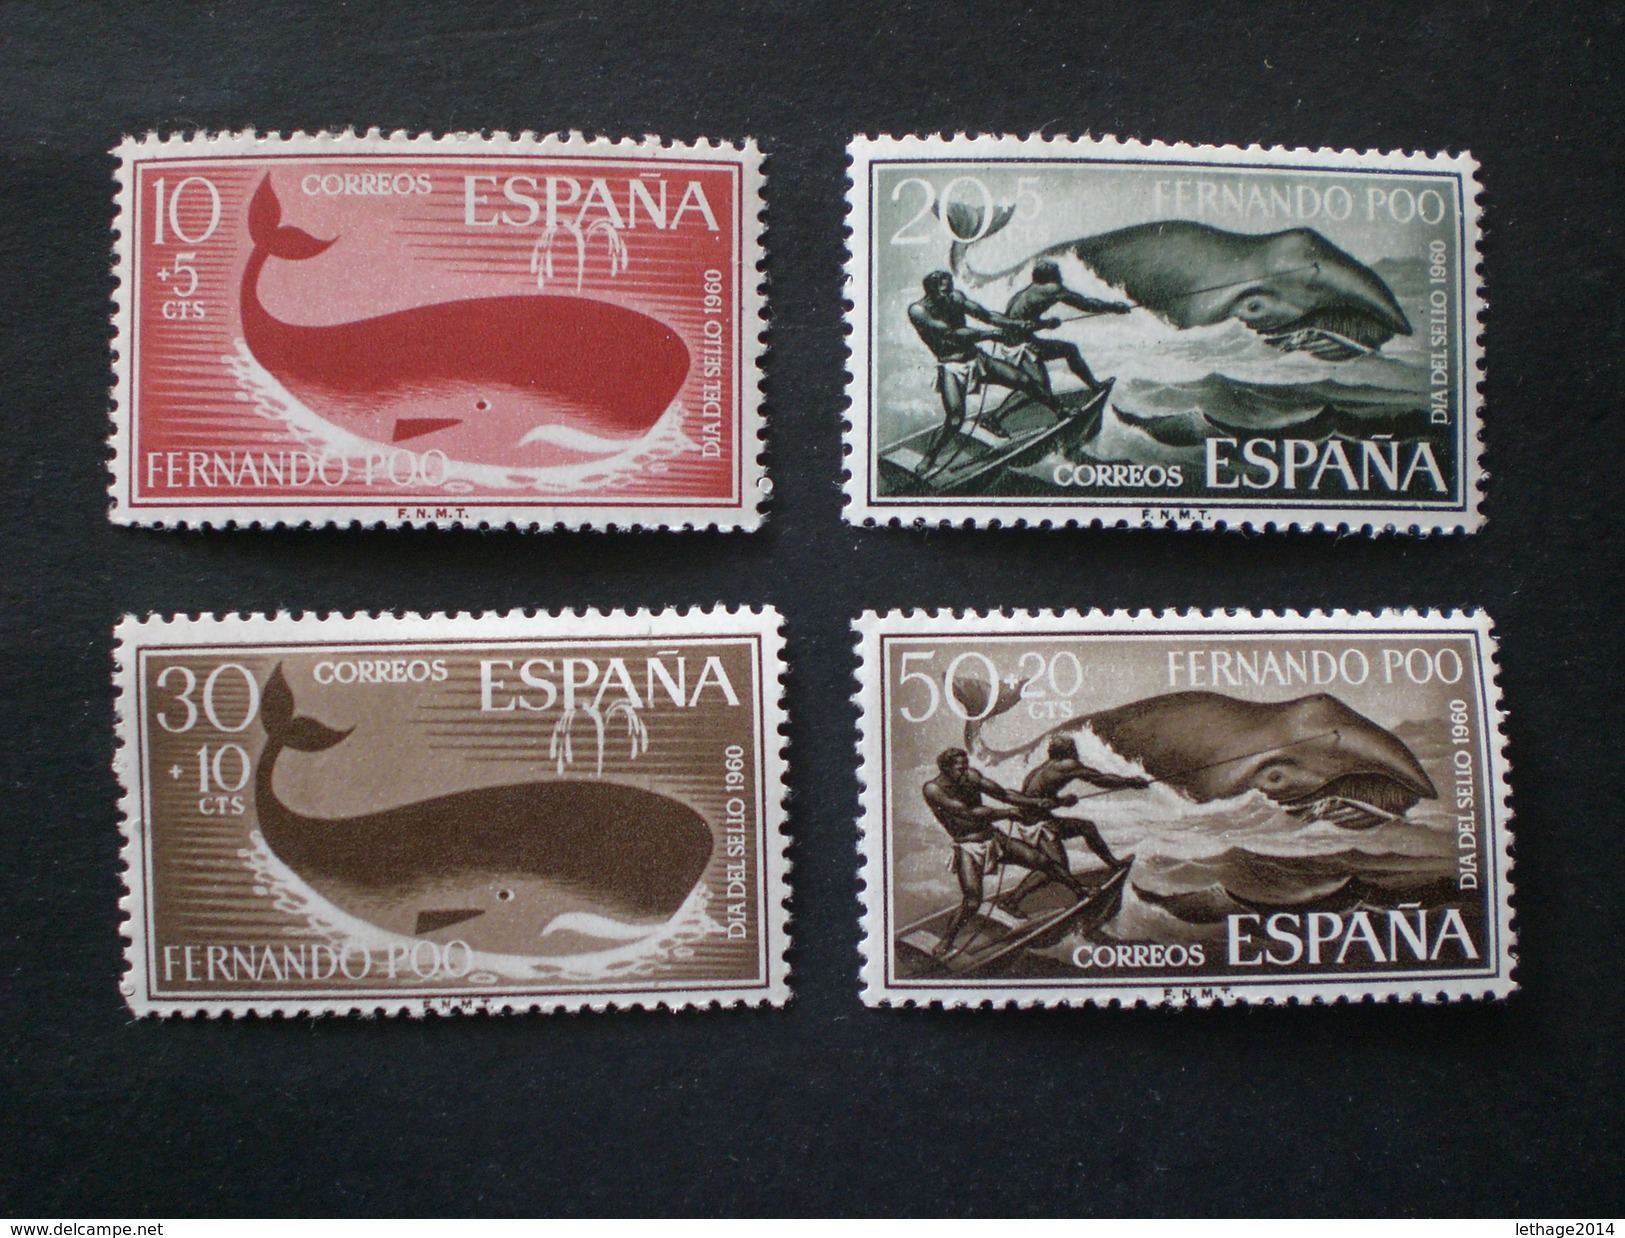 FERNANDO POO 1960 Stamp Day MVLH - Fernando Po